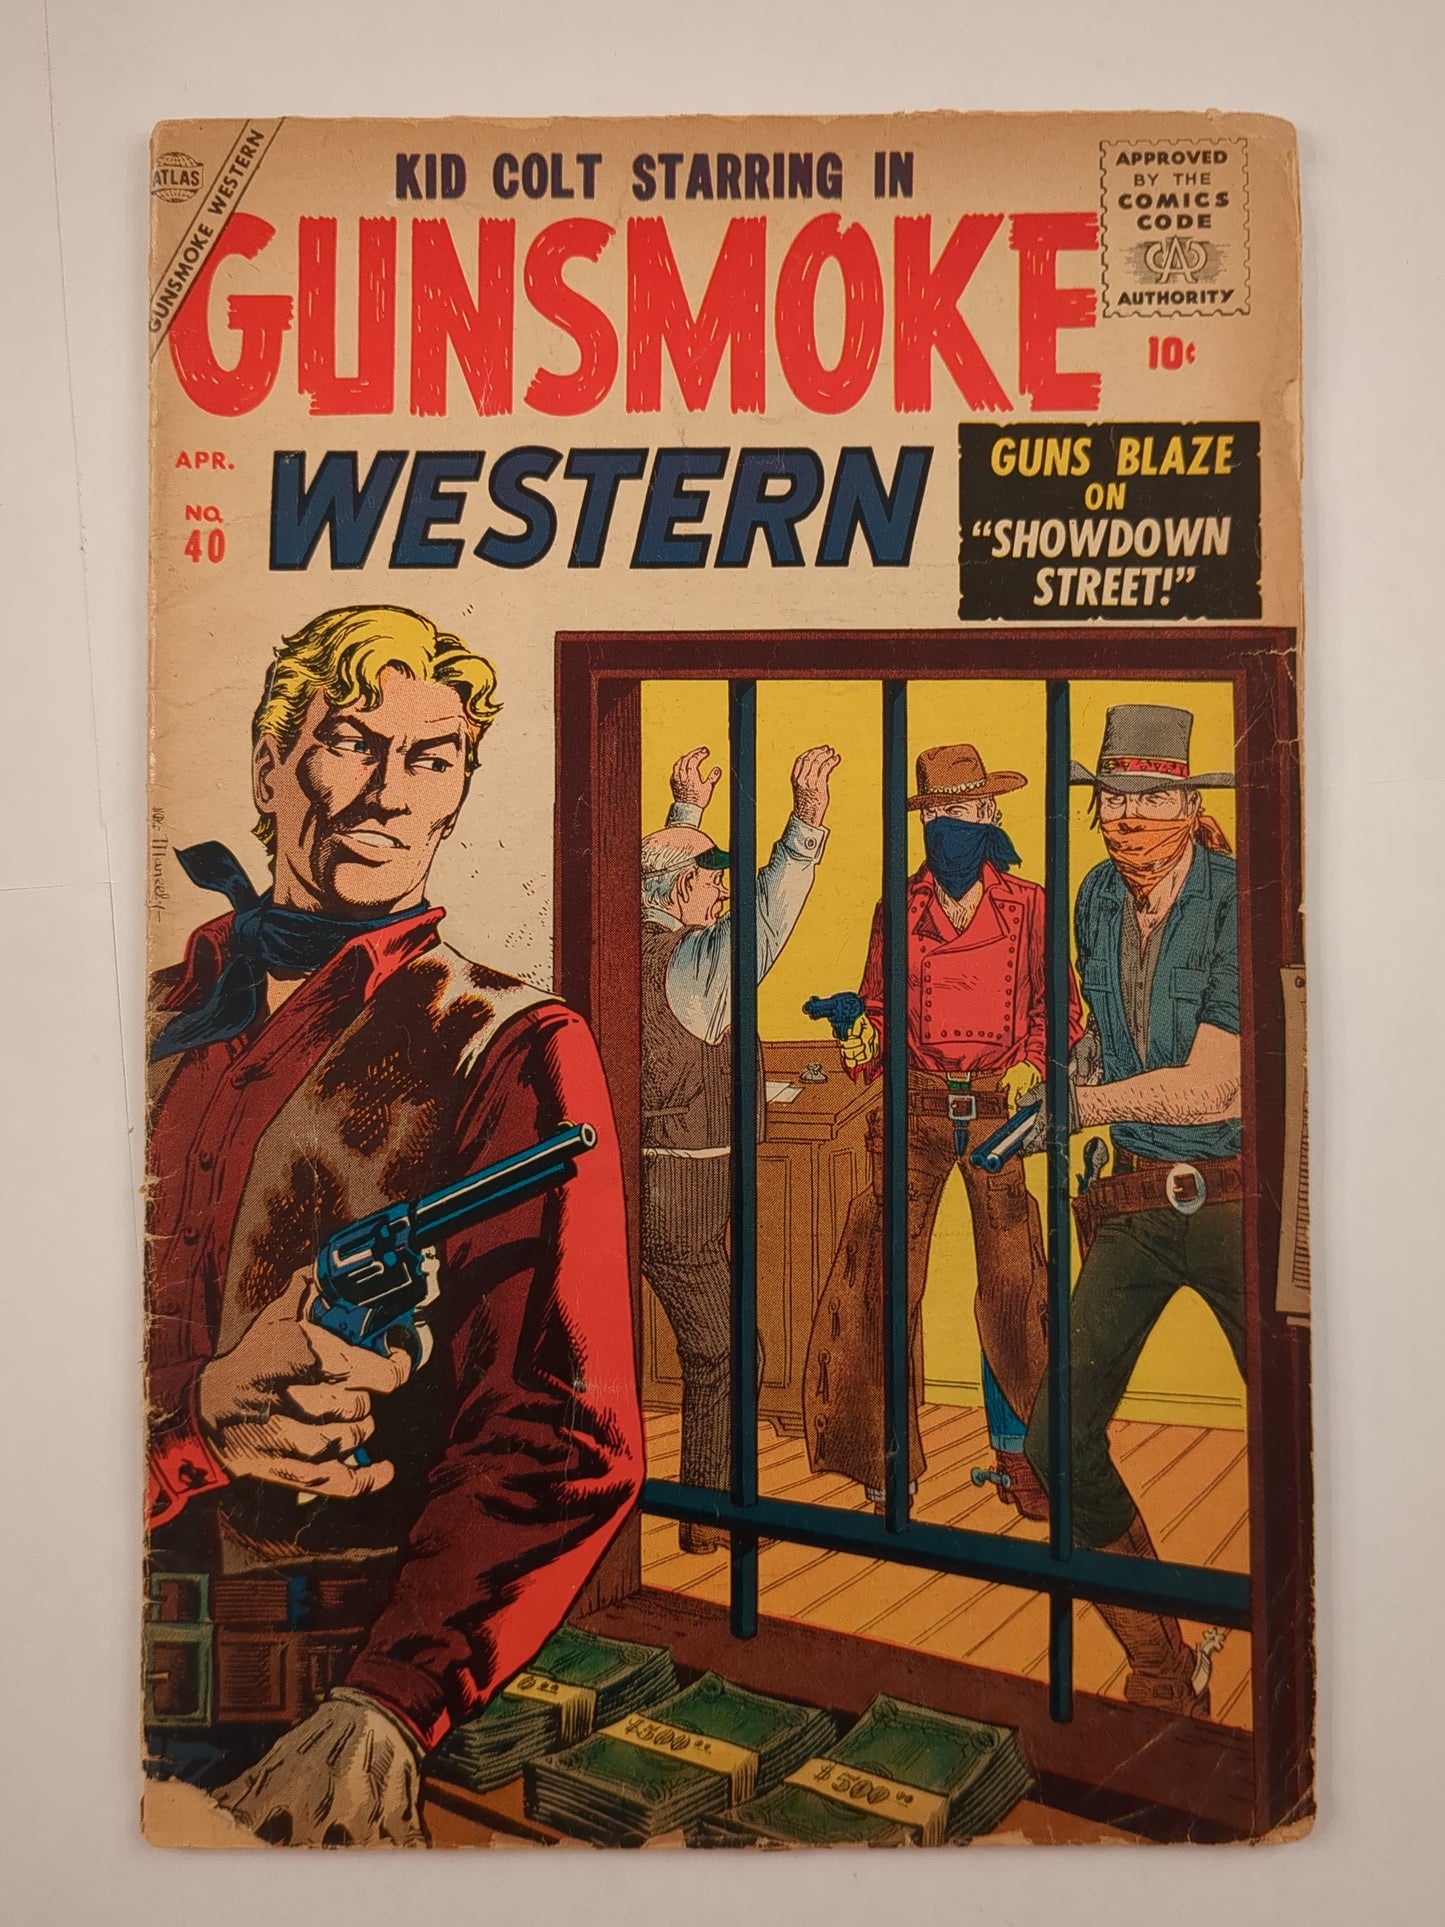 Gunsmoke Western (1955) # 40 de abril de 1957